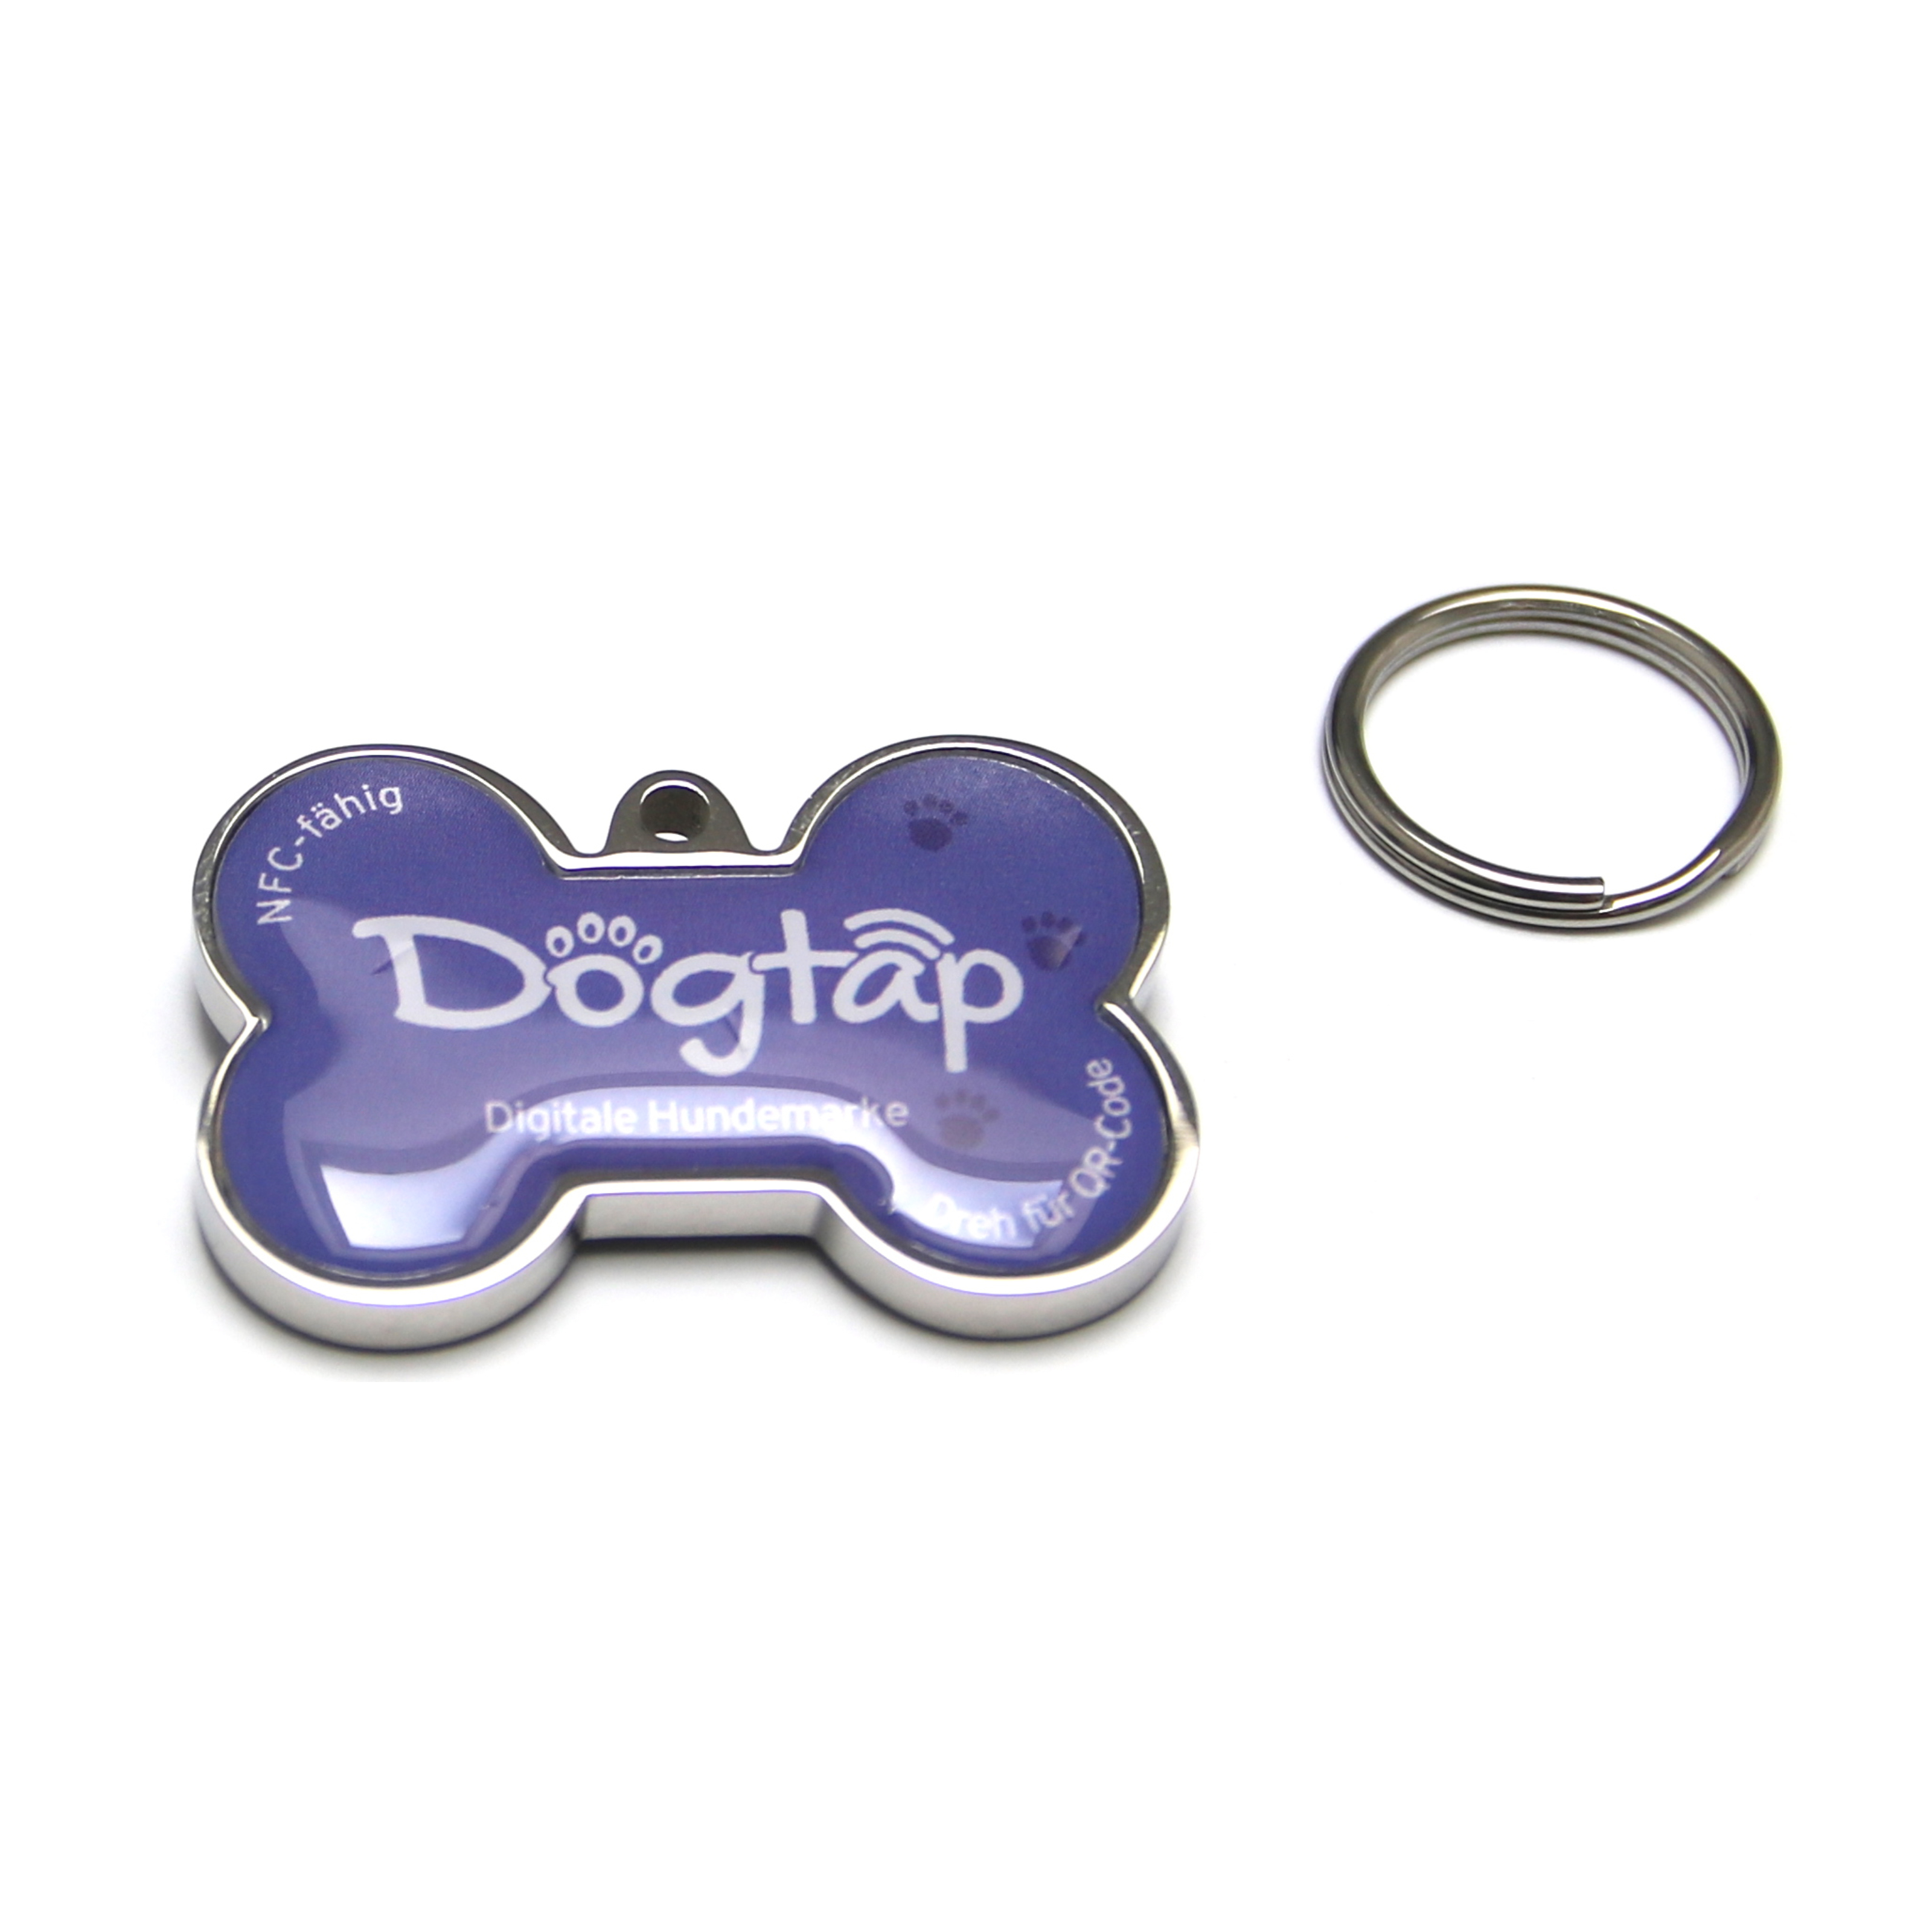 Dogtap Solid - Digitale Hundemarke - PVC / Metall - 41,6 x 28,5 x 4,6 mm - lila